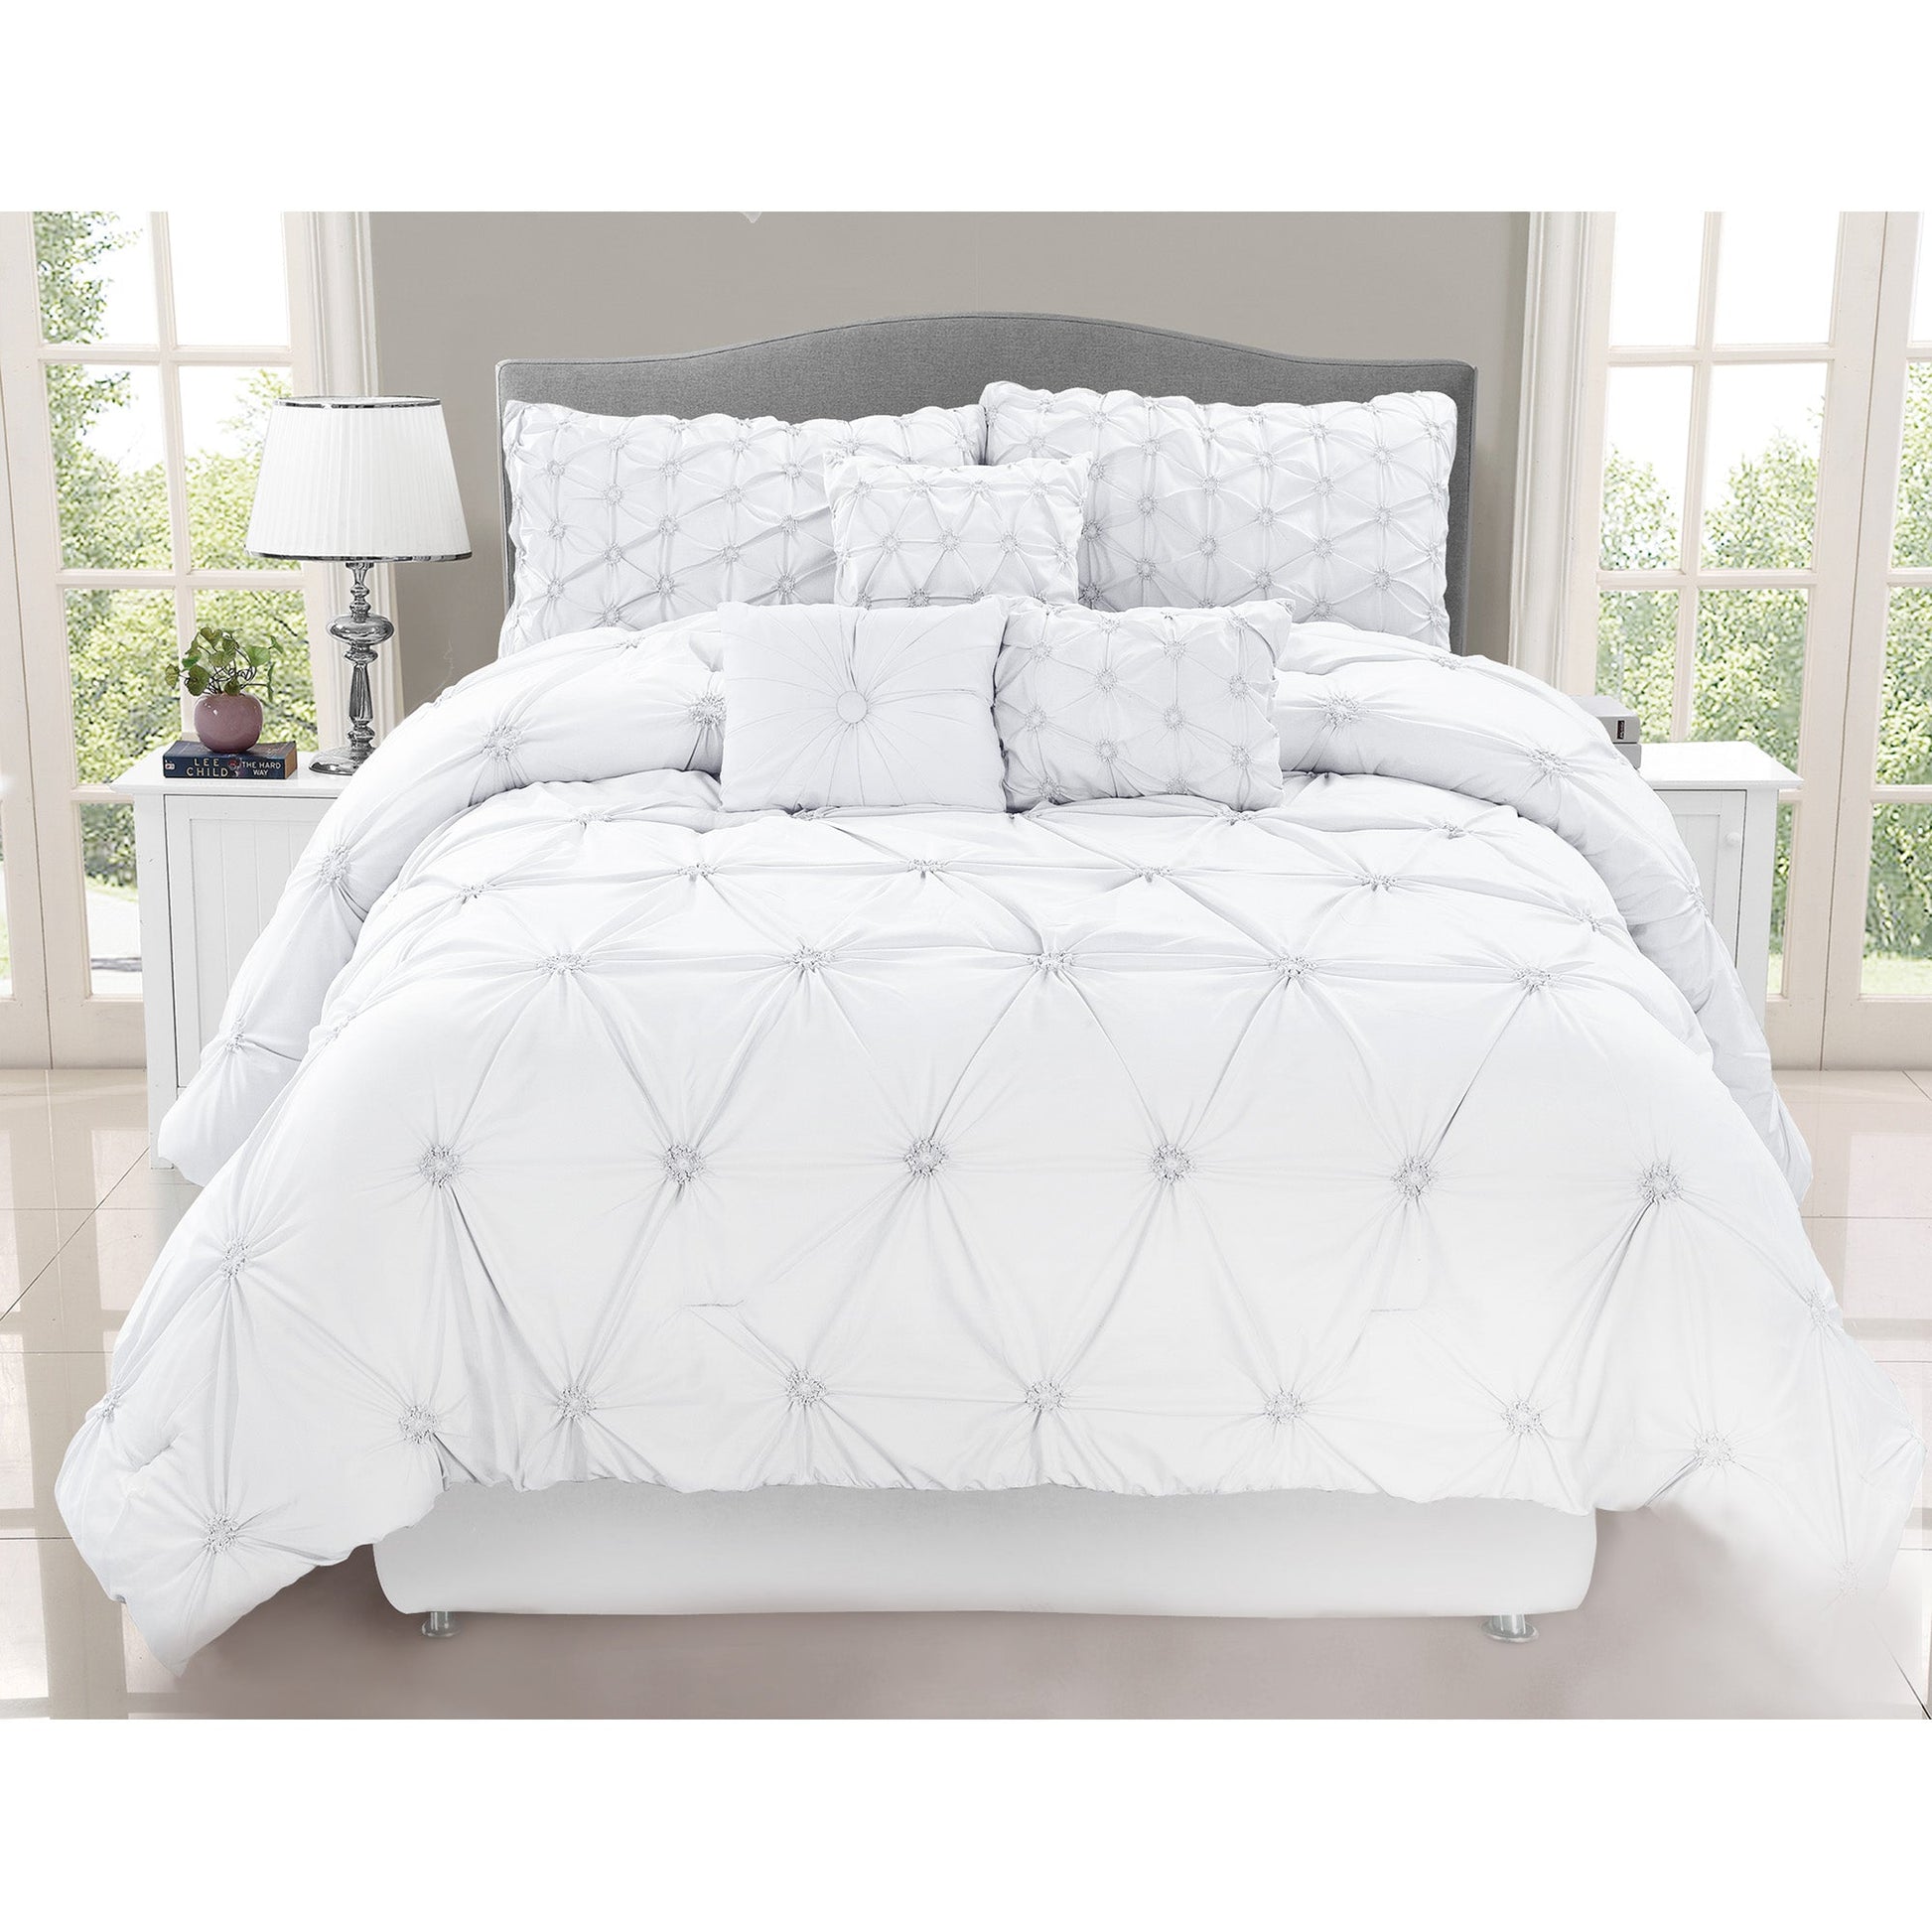 Comforter Chateau 7 Piece Queen White - DecoElegance - Bedding Comforter Set